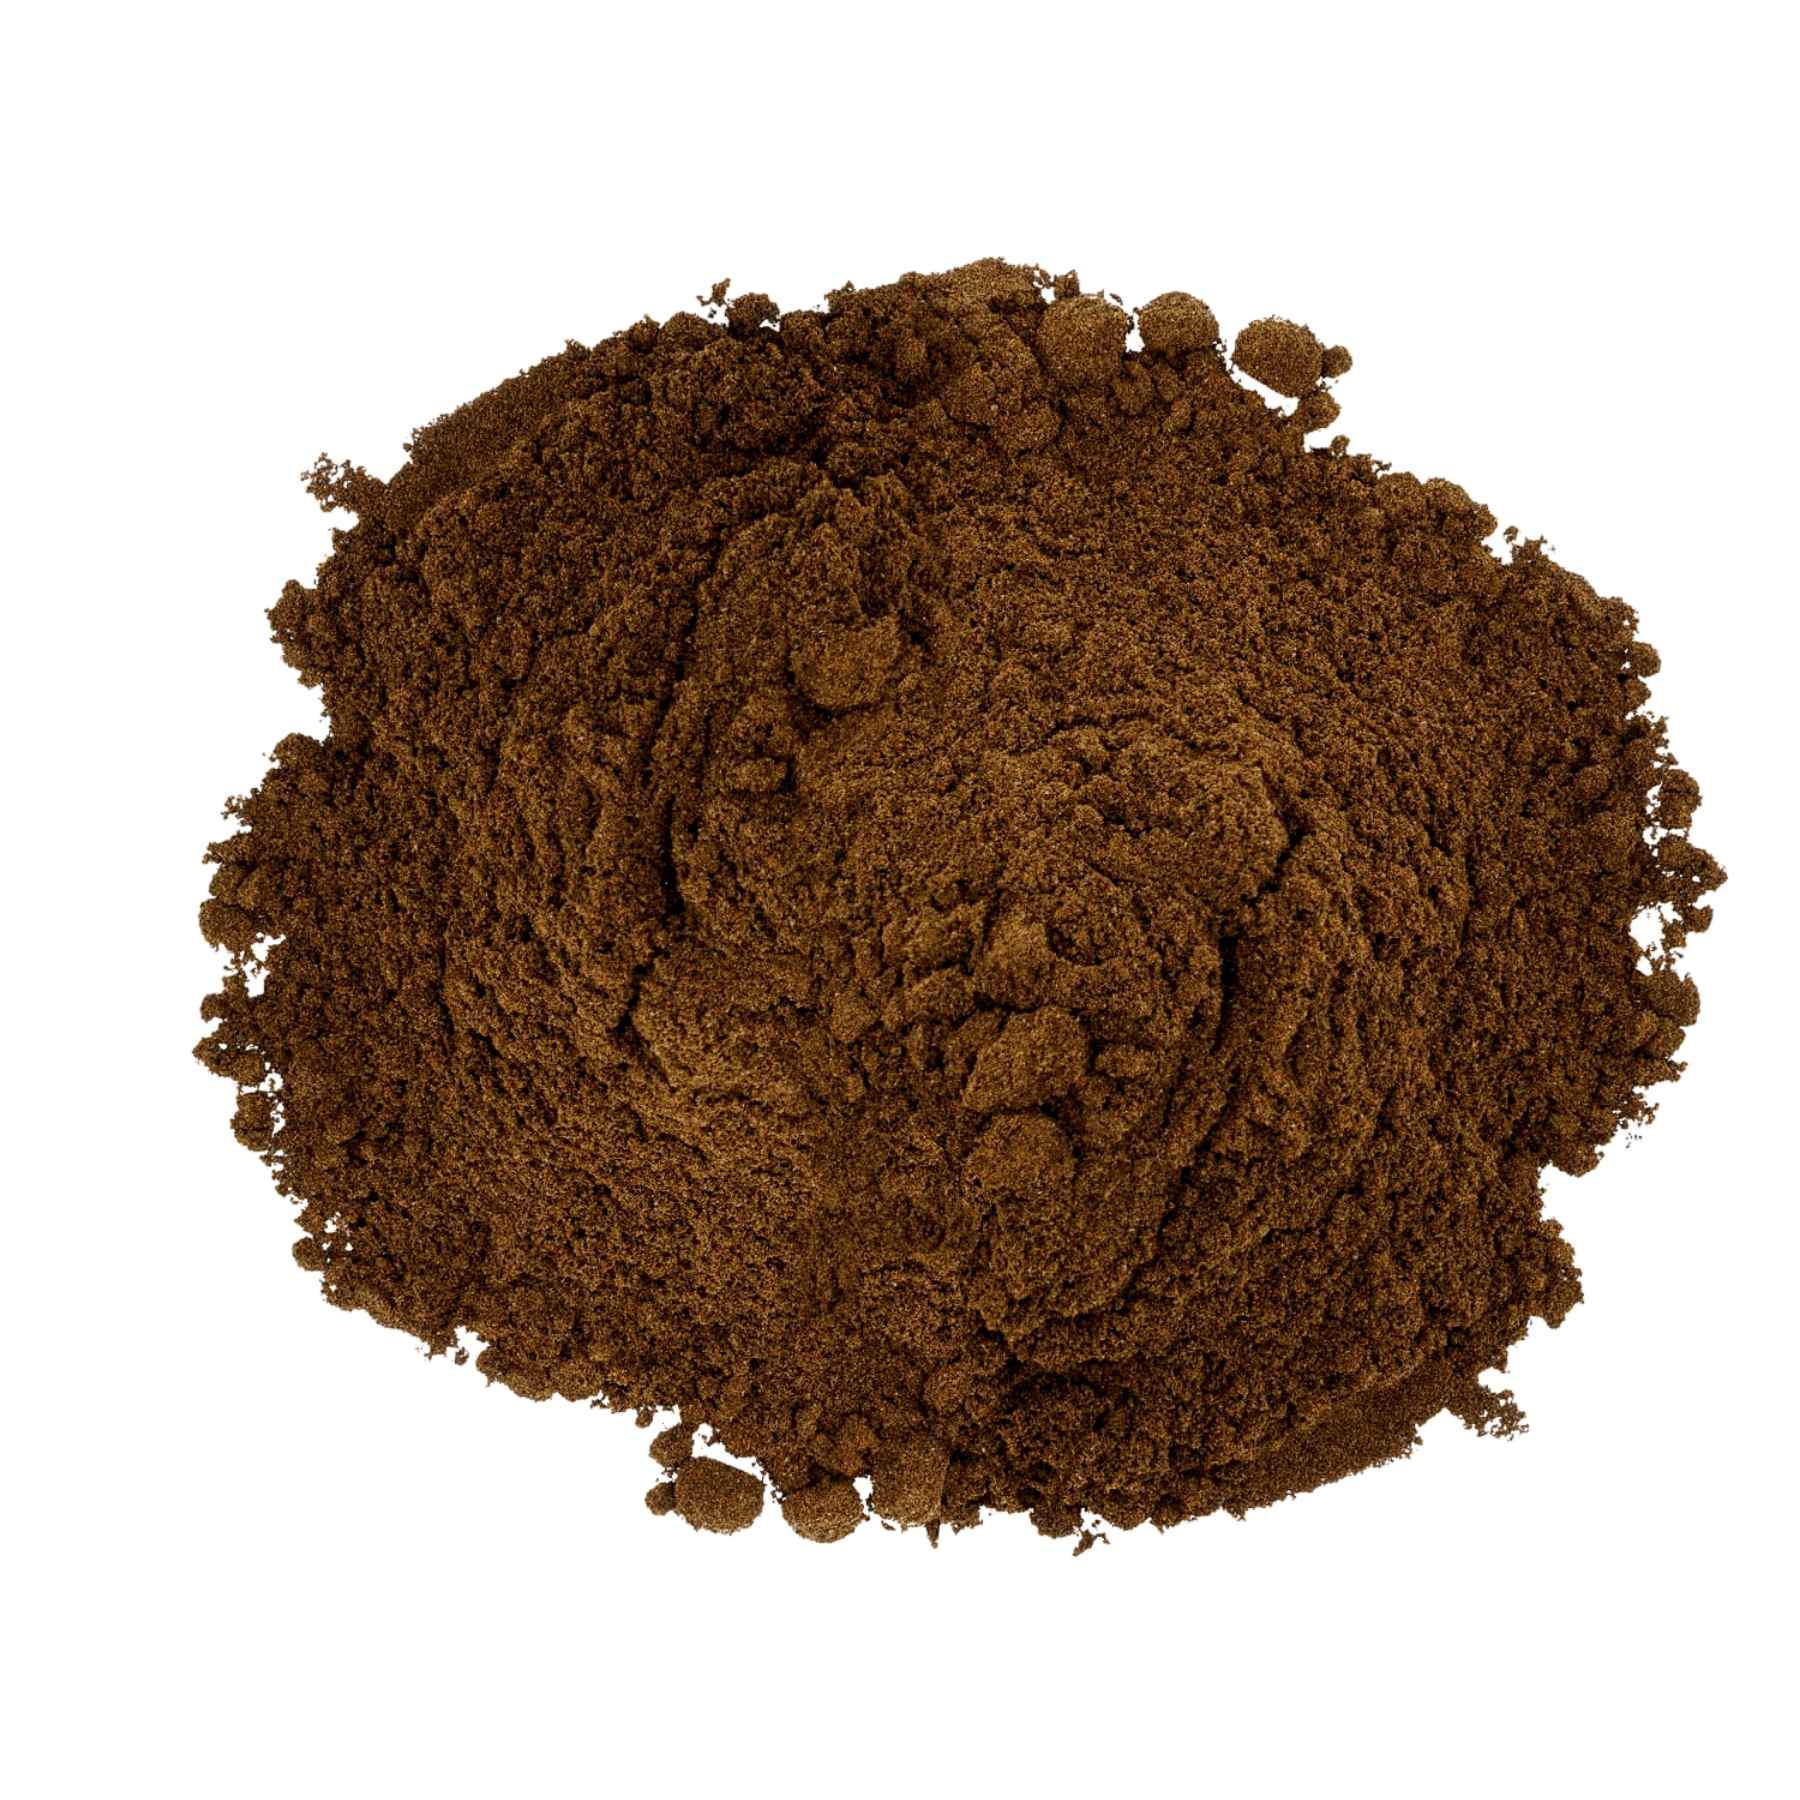 Vanilla Bean Powder from Tahiti Seasonings & Spices Slofoodgroup .5 oz 